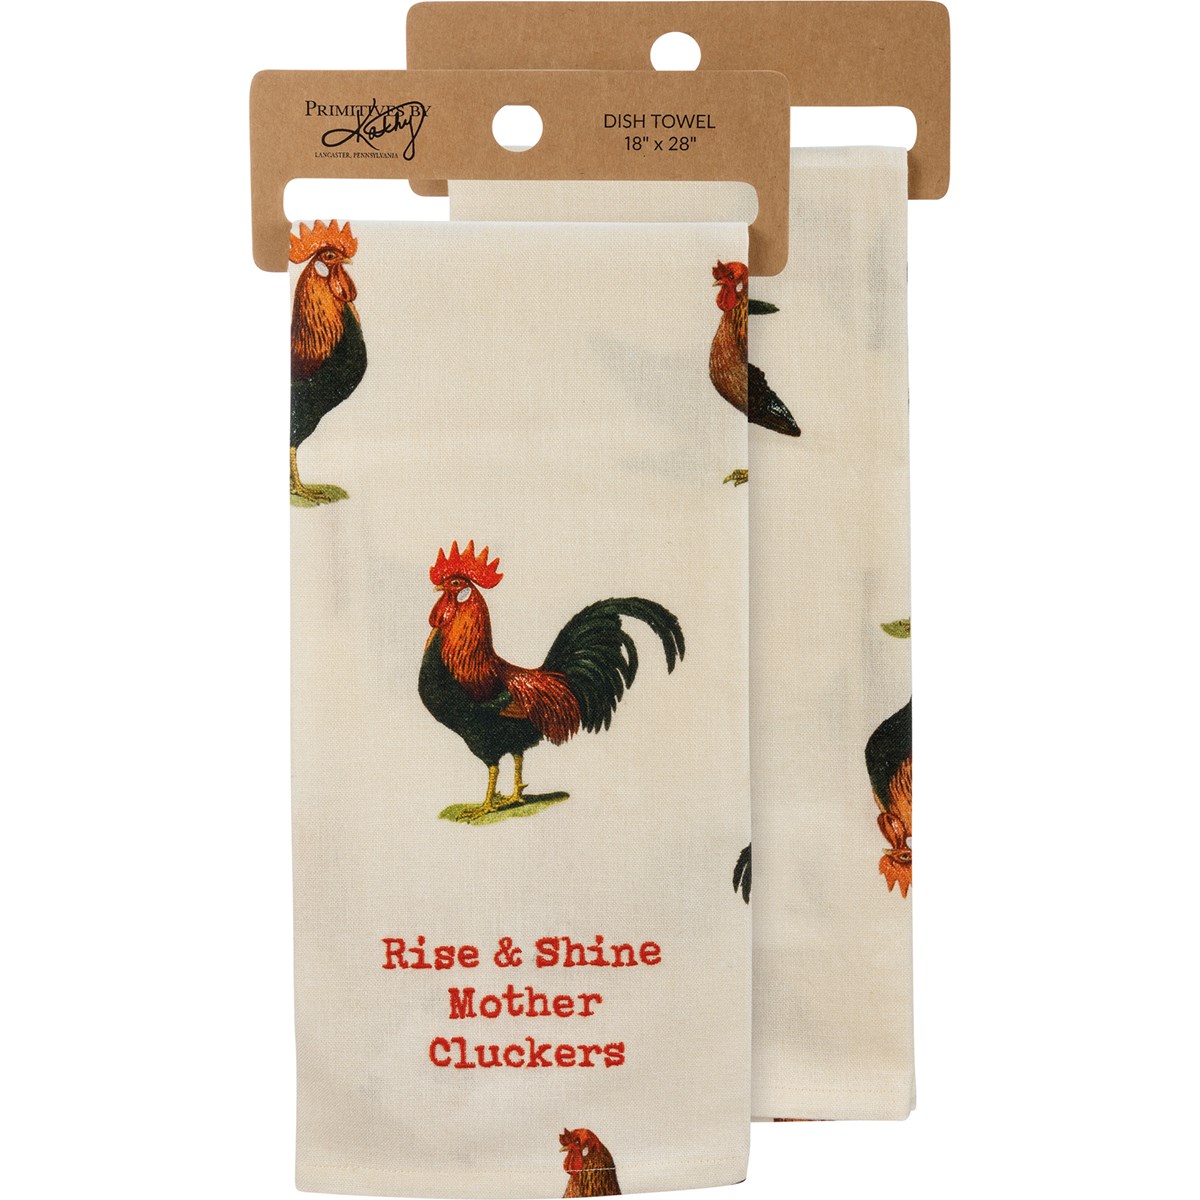 Rise & Shine Mother Cluckers Kitchen Towel - Cotton, Linen